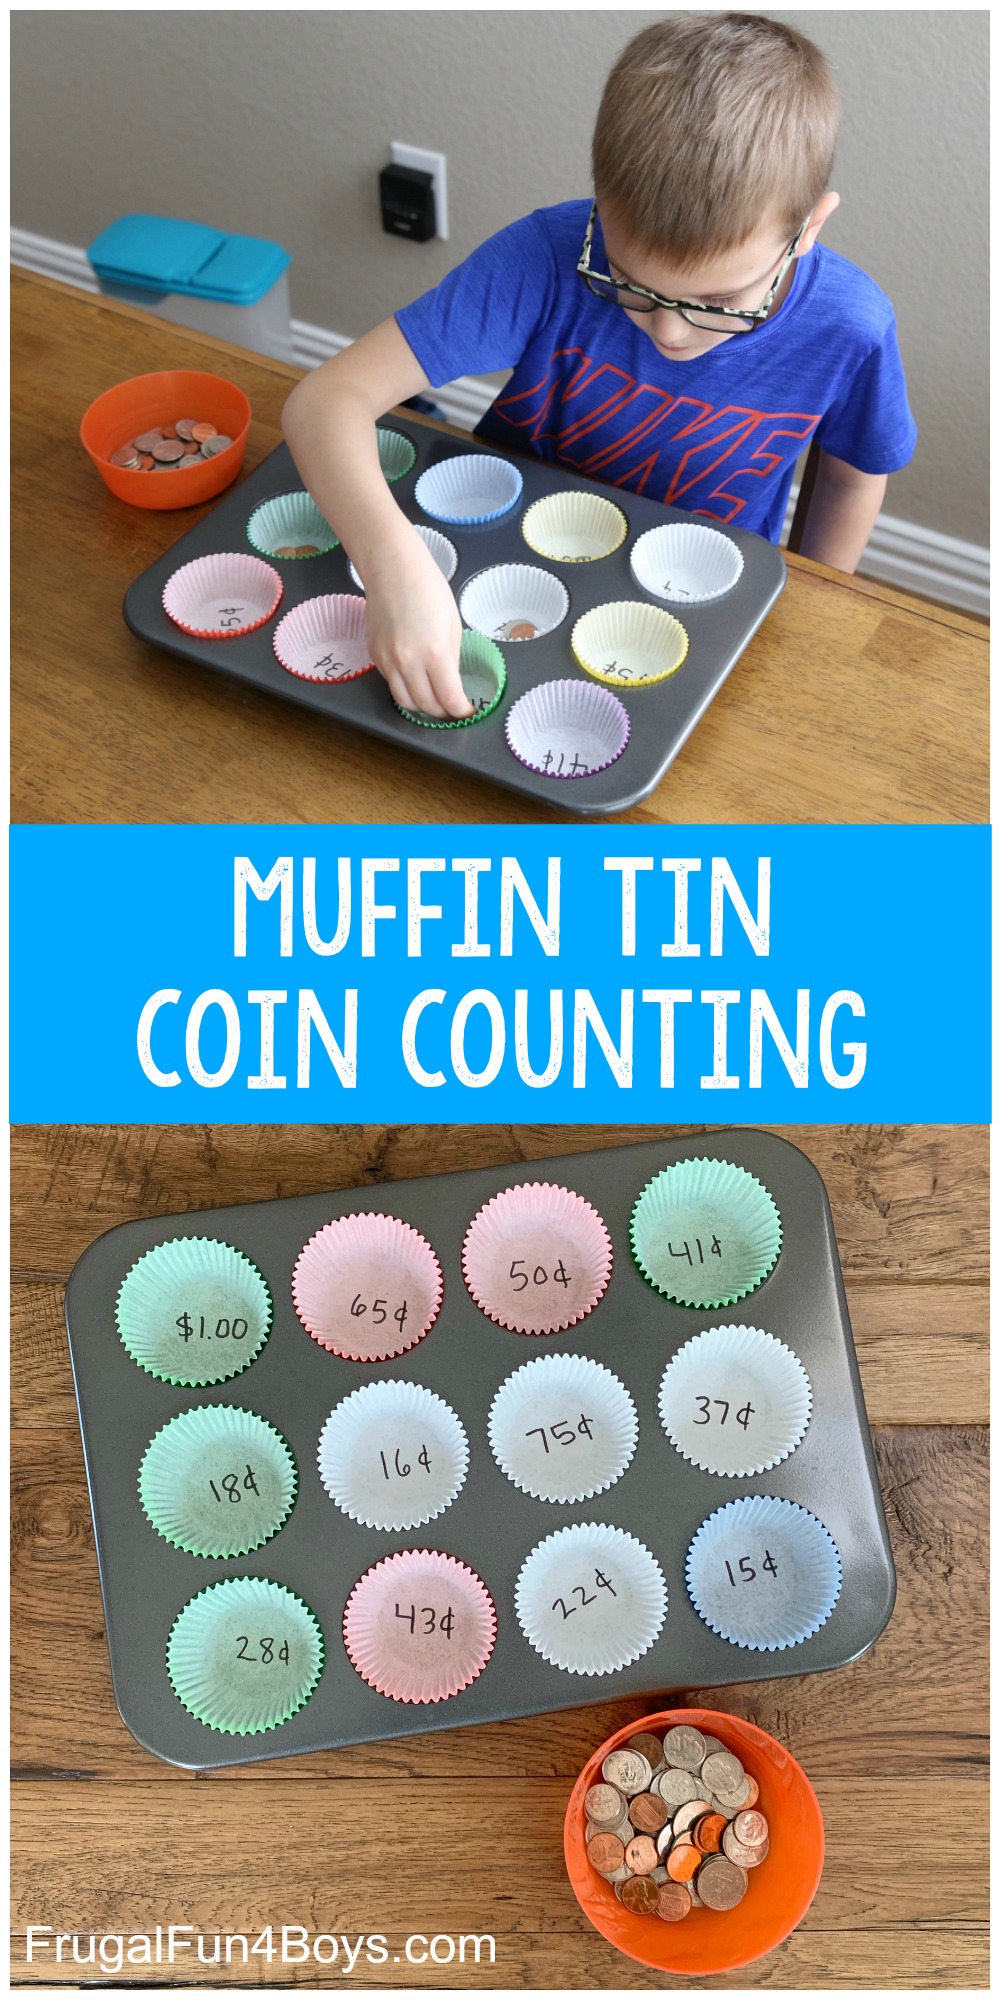 https://frugalfun4boys.com/app/uploads/2019/02/Muffin-Tin-Coin-Counting-Pin.jpg